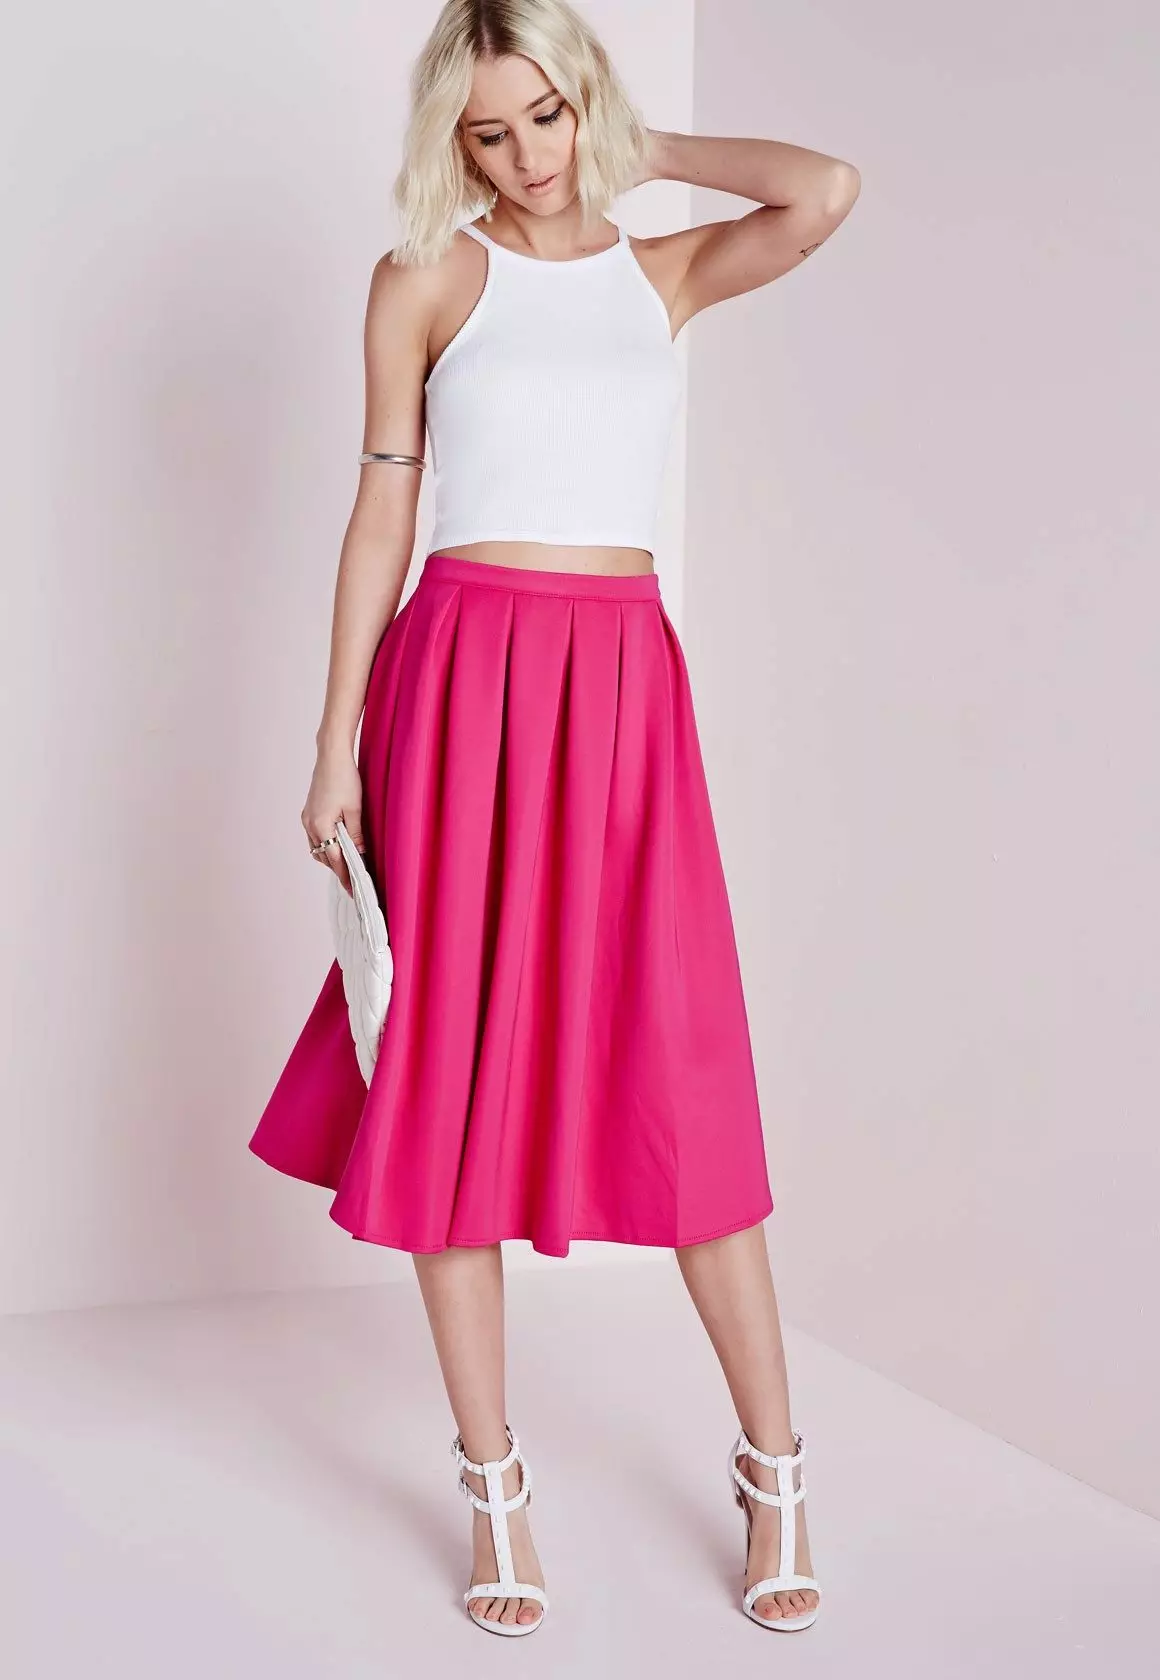 skirt merah jambu (150 foto): Apa yang memakai, panjang dan pendek, pensil dan matahari subur, lembut merah jambu merah jambu dan terang, dengan putih, hitam, panjang 14630_24